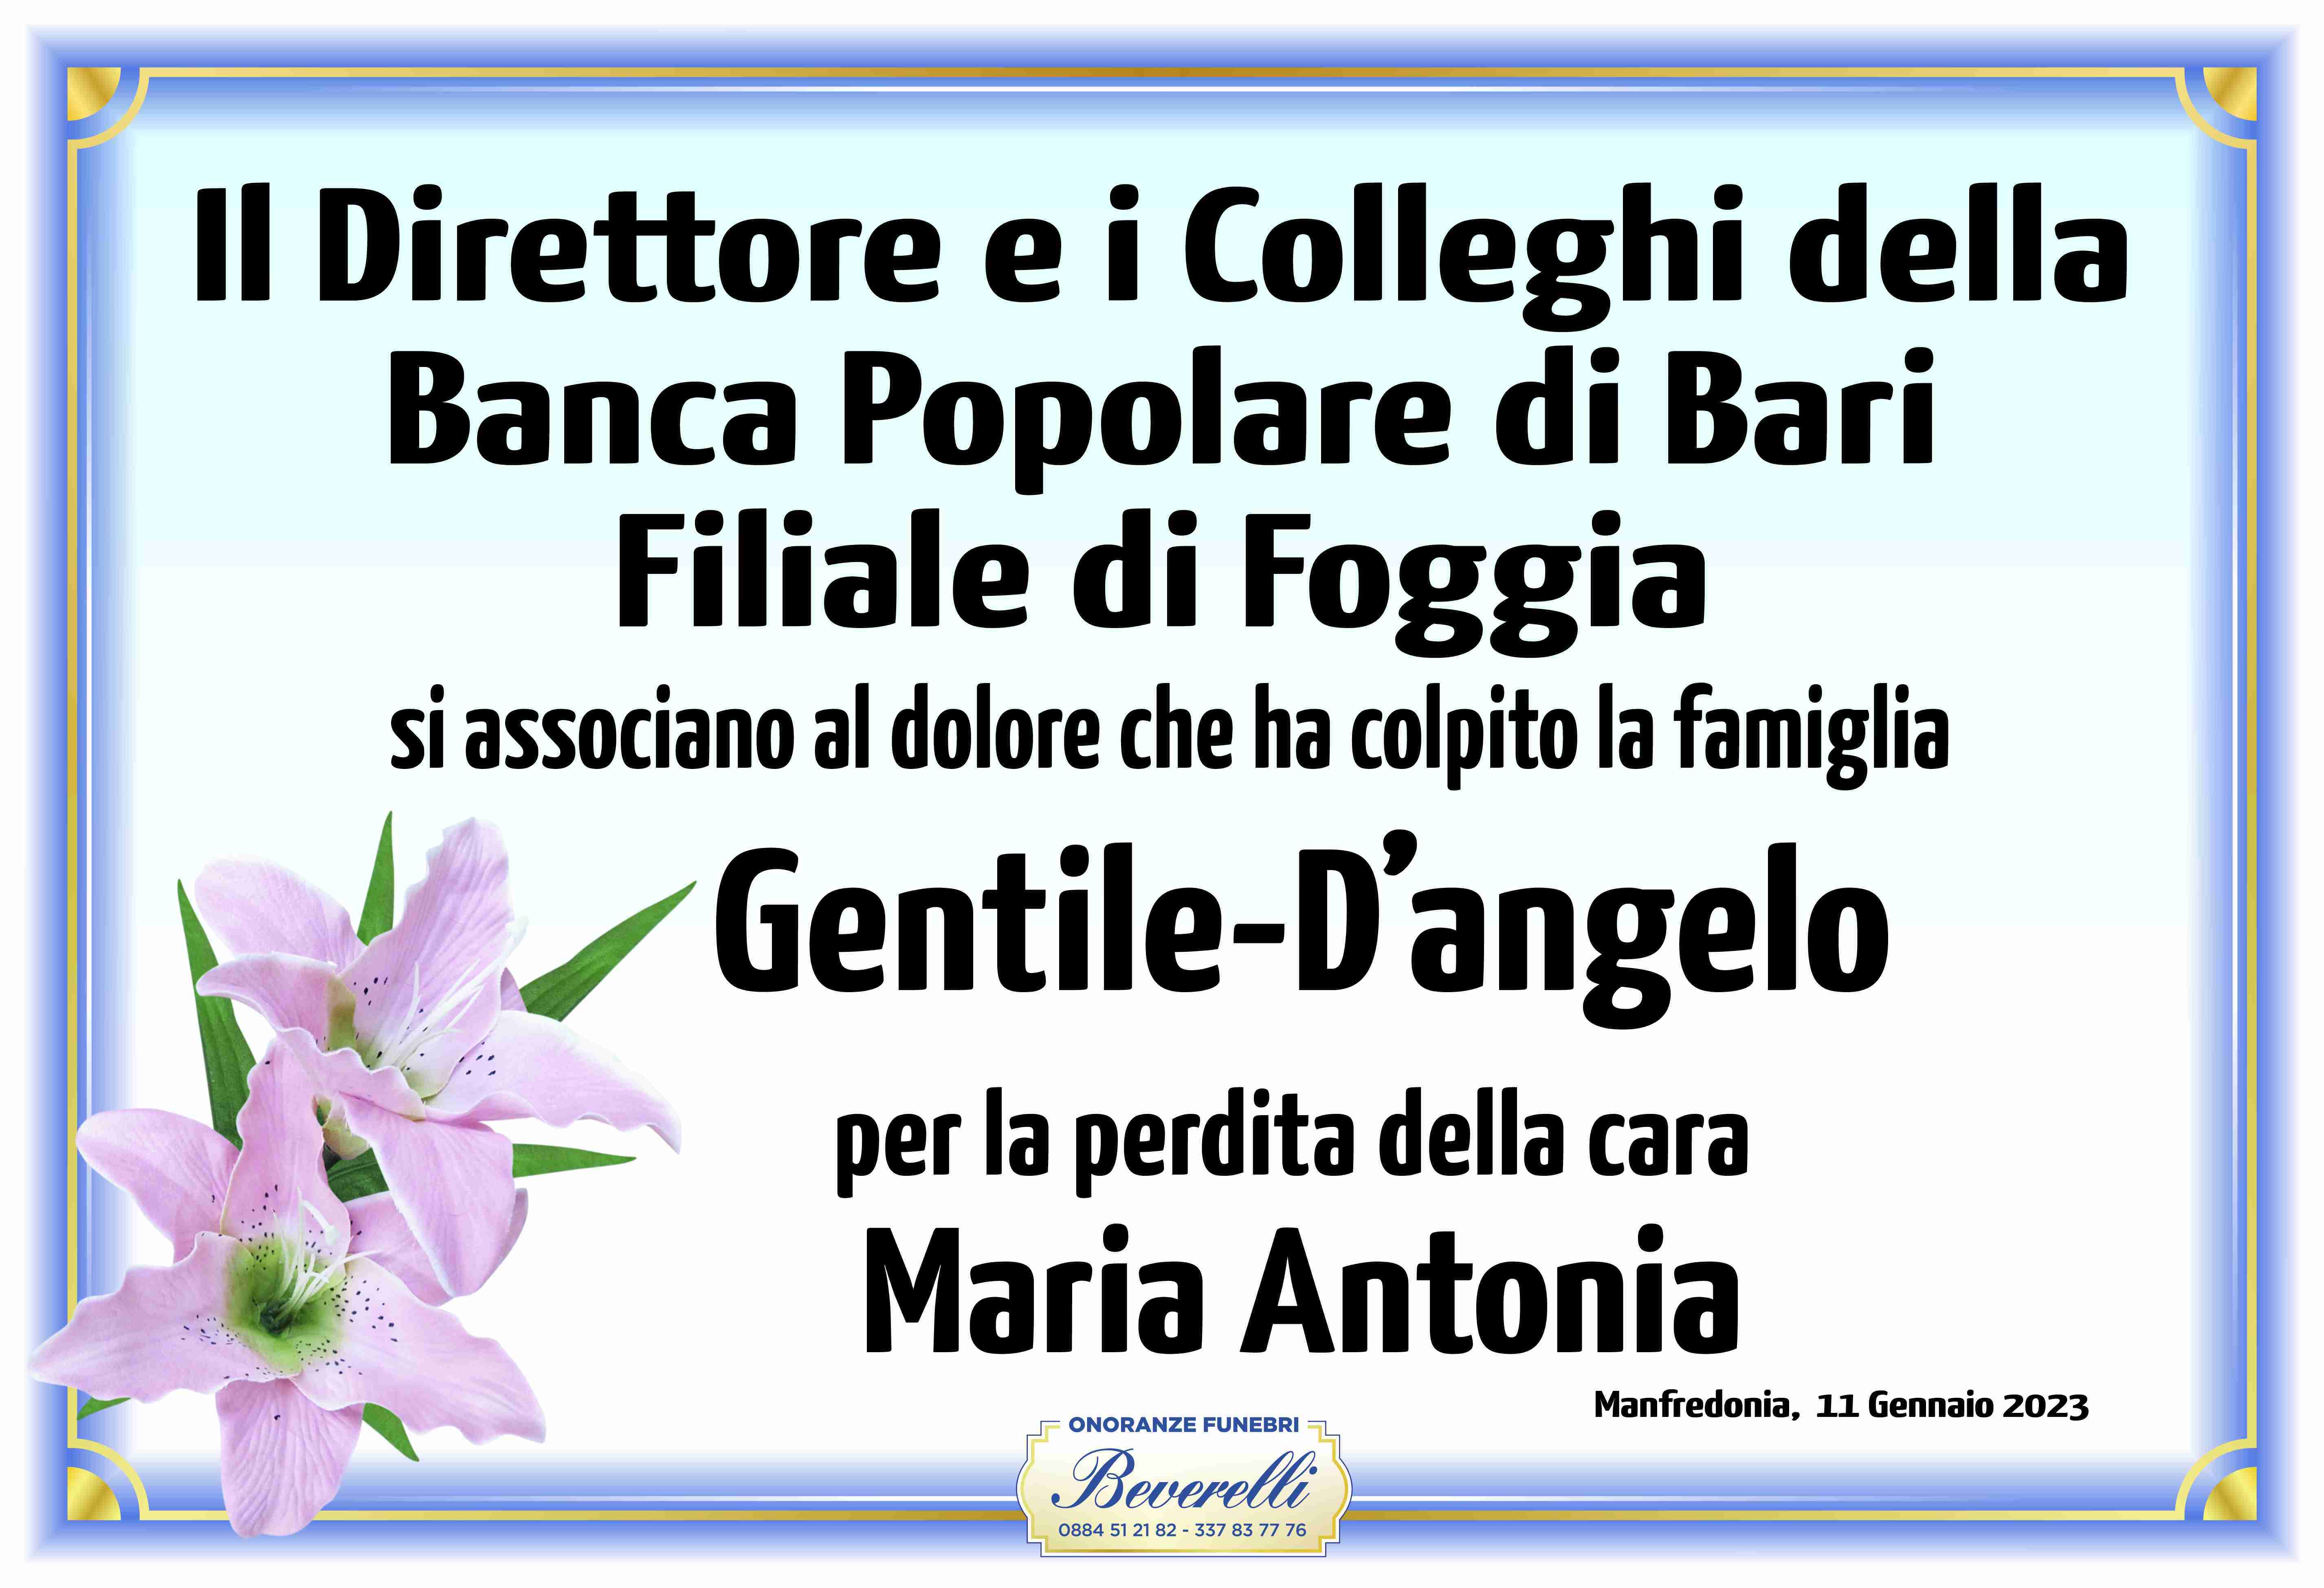 Maria Antonia D'Angelo